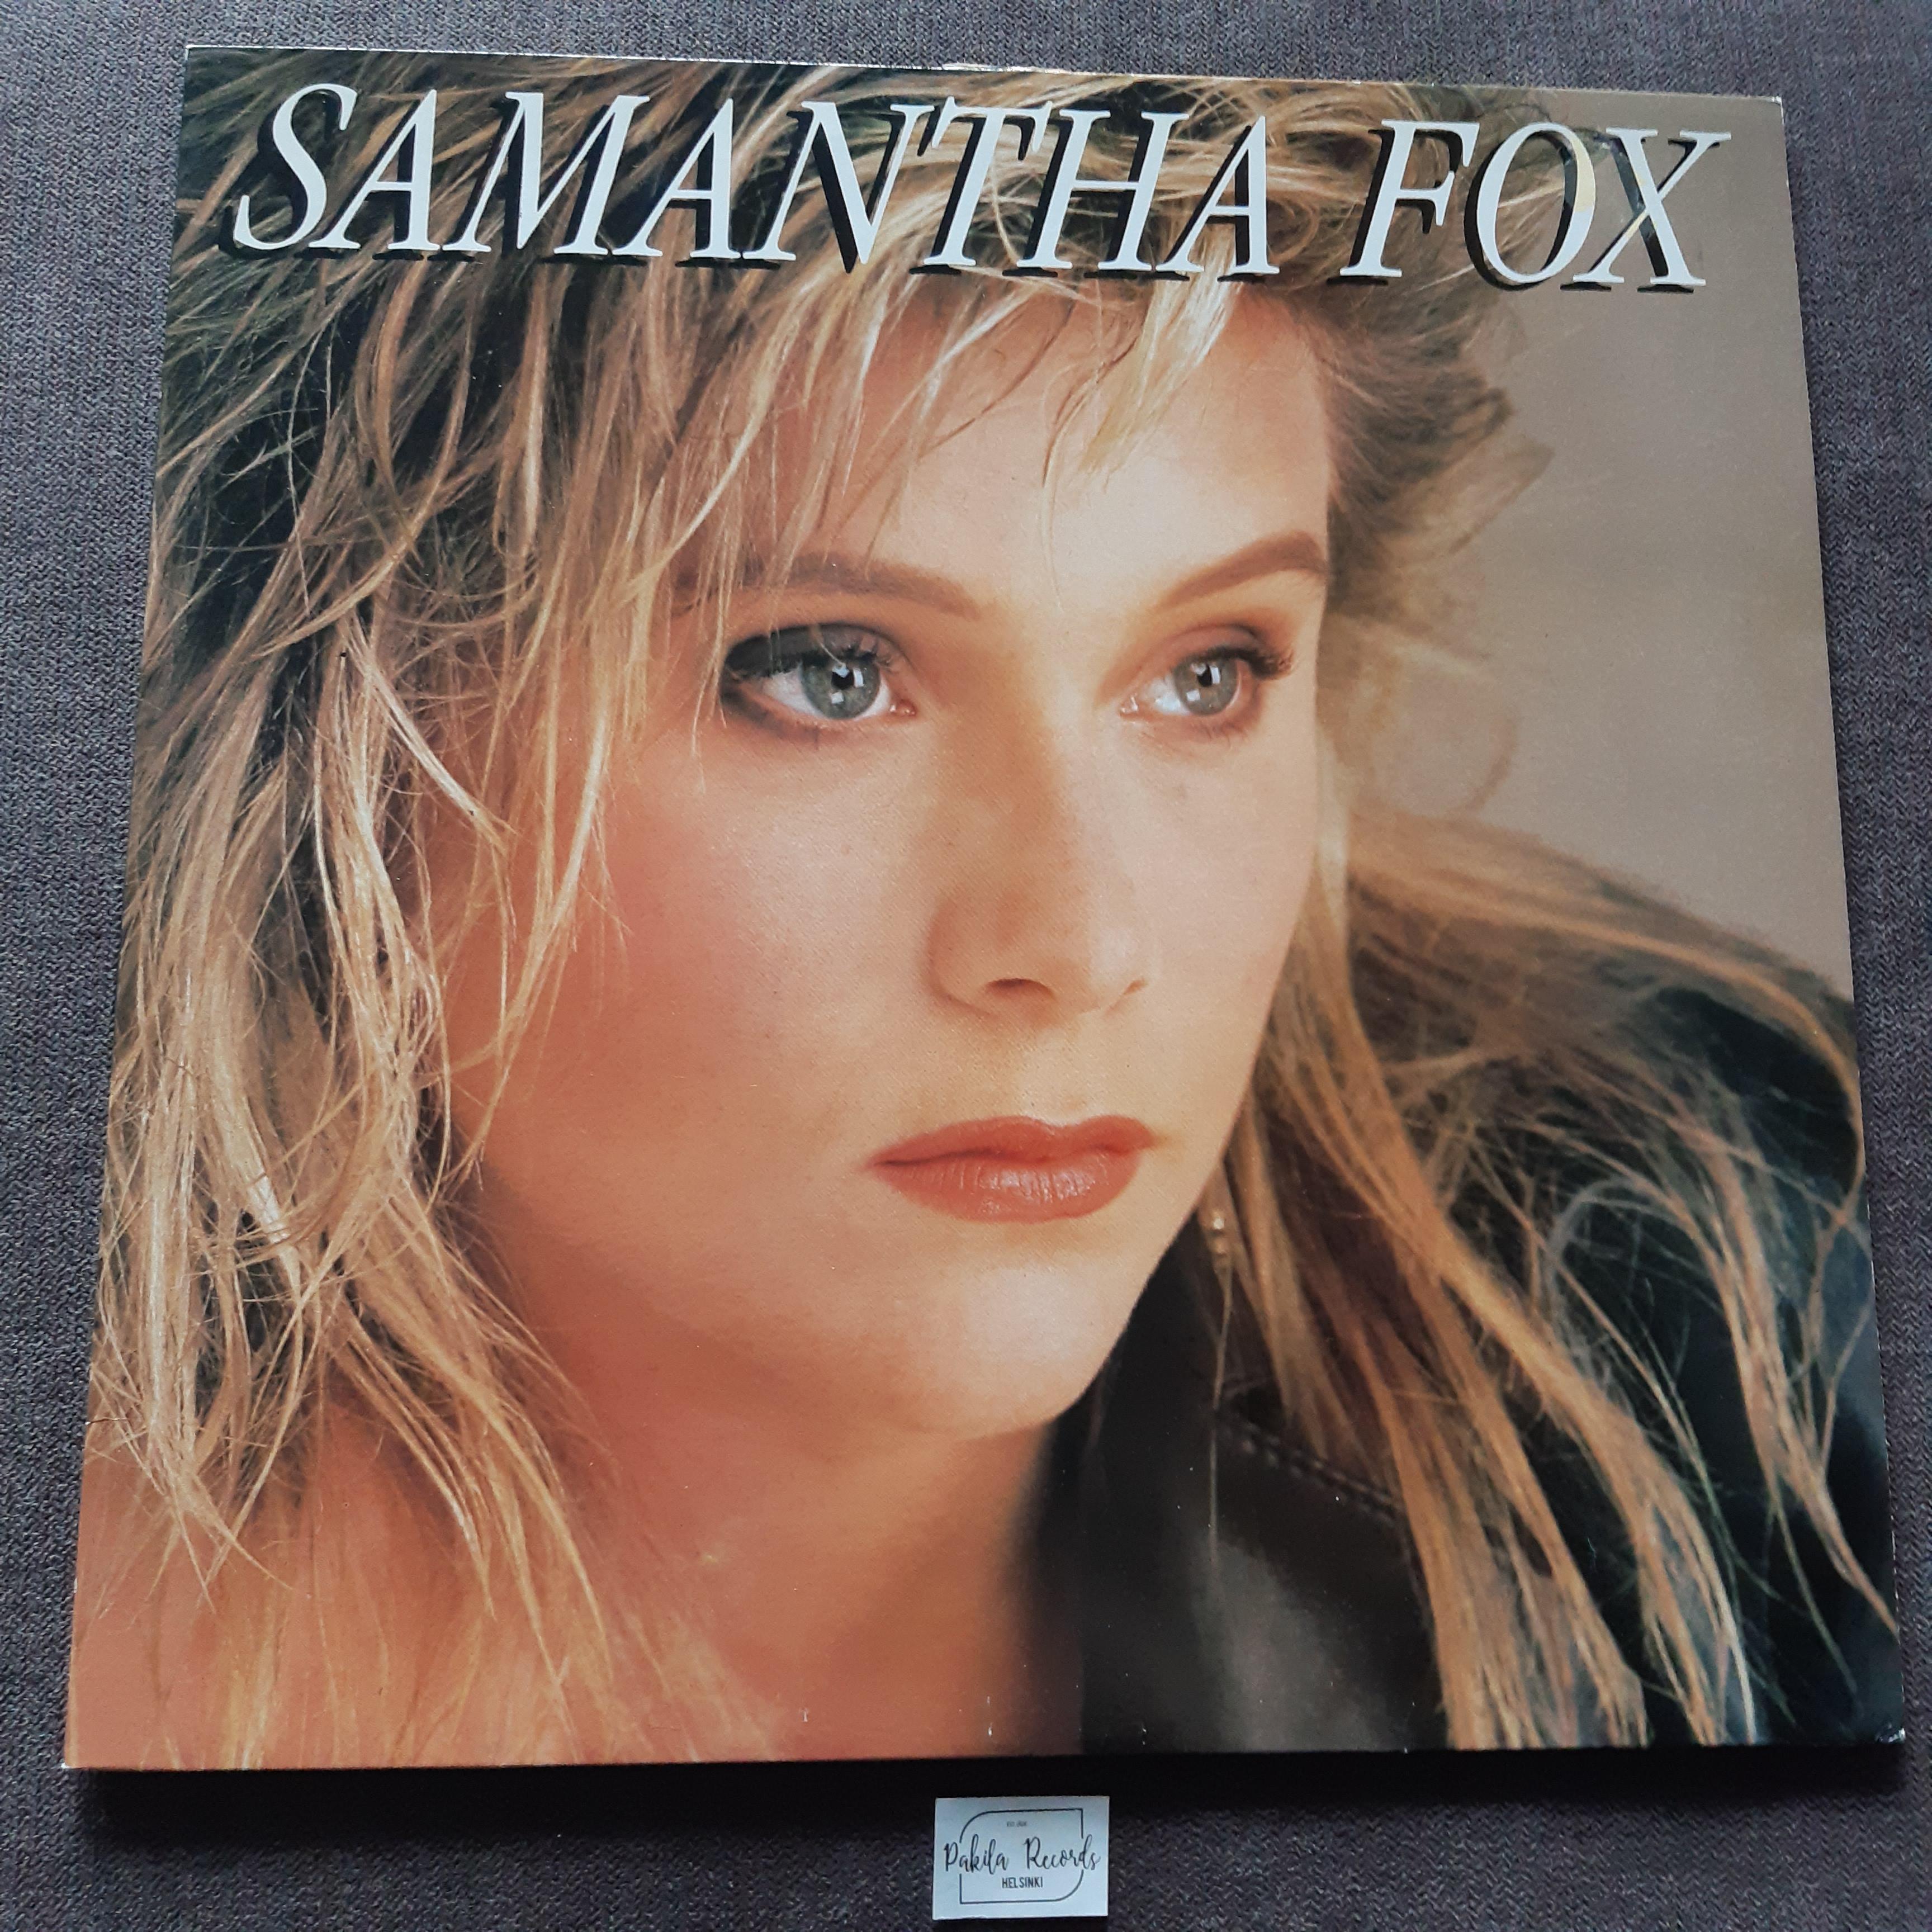 Samantha Fox - Samantha Fox - LP (käytetty)